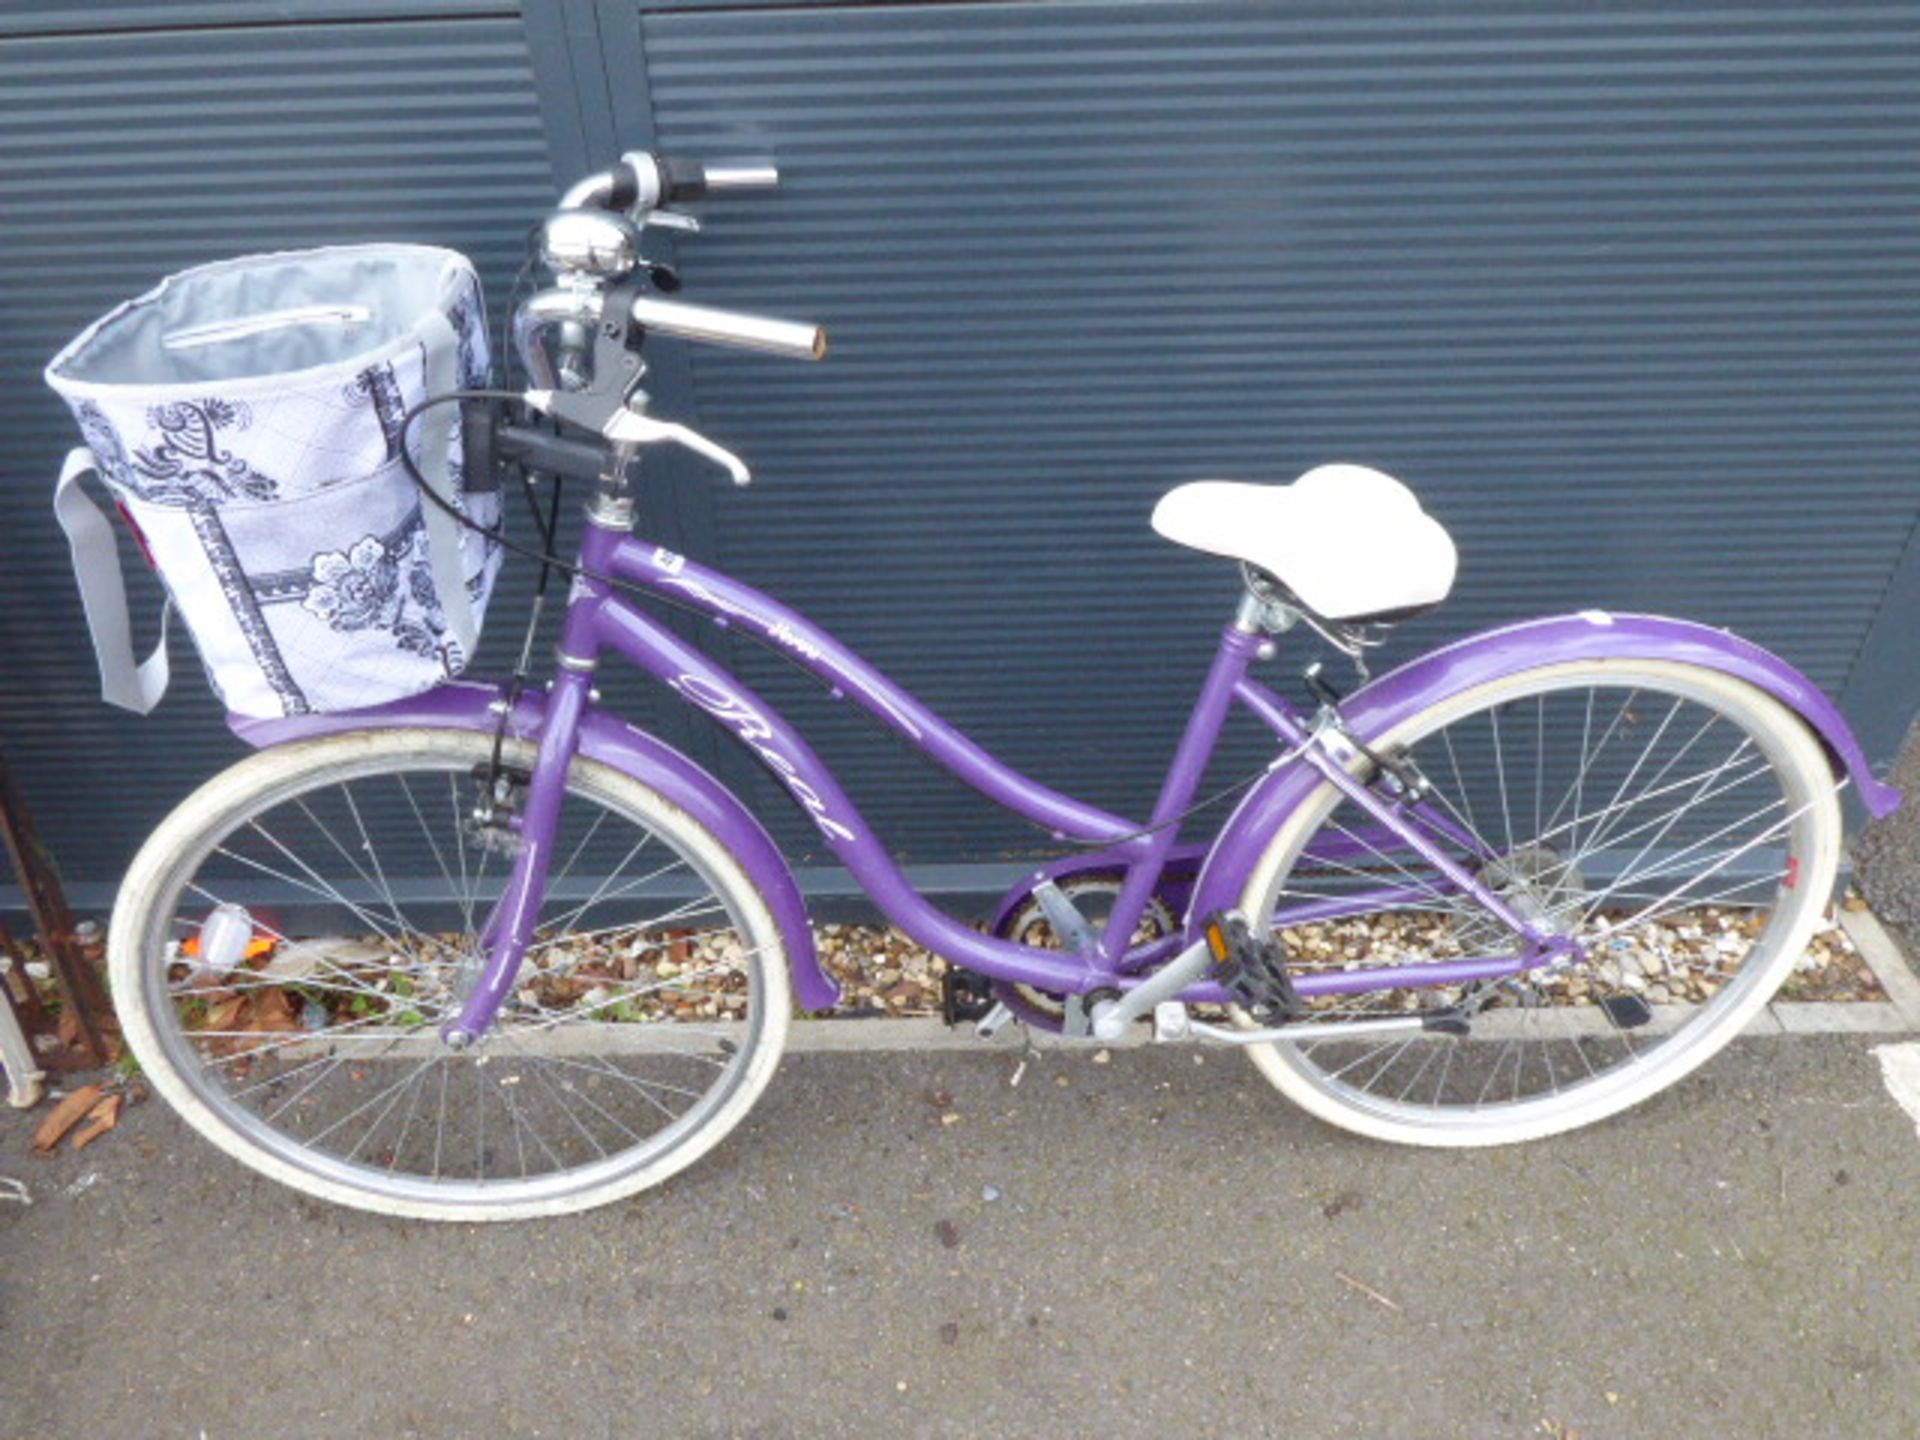 4038 - Purple ladies bike with front basket